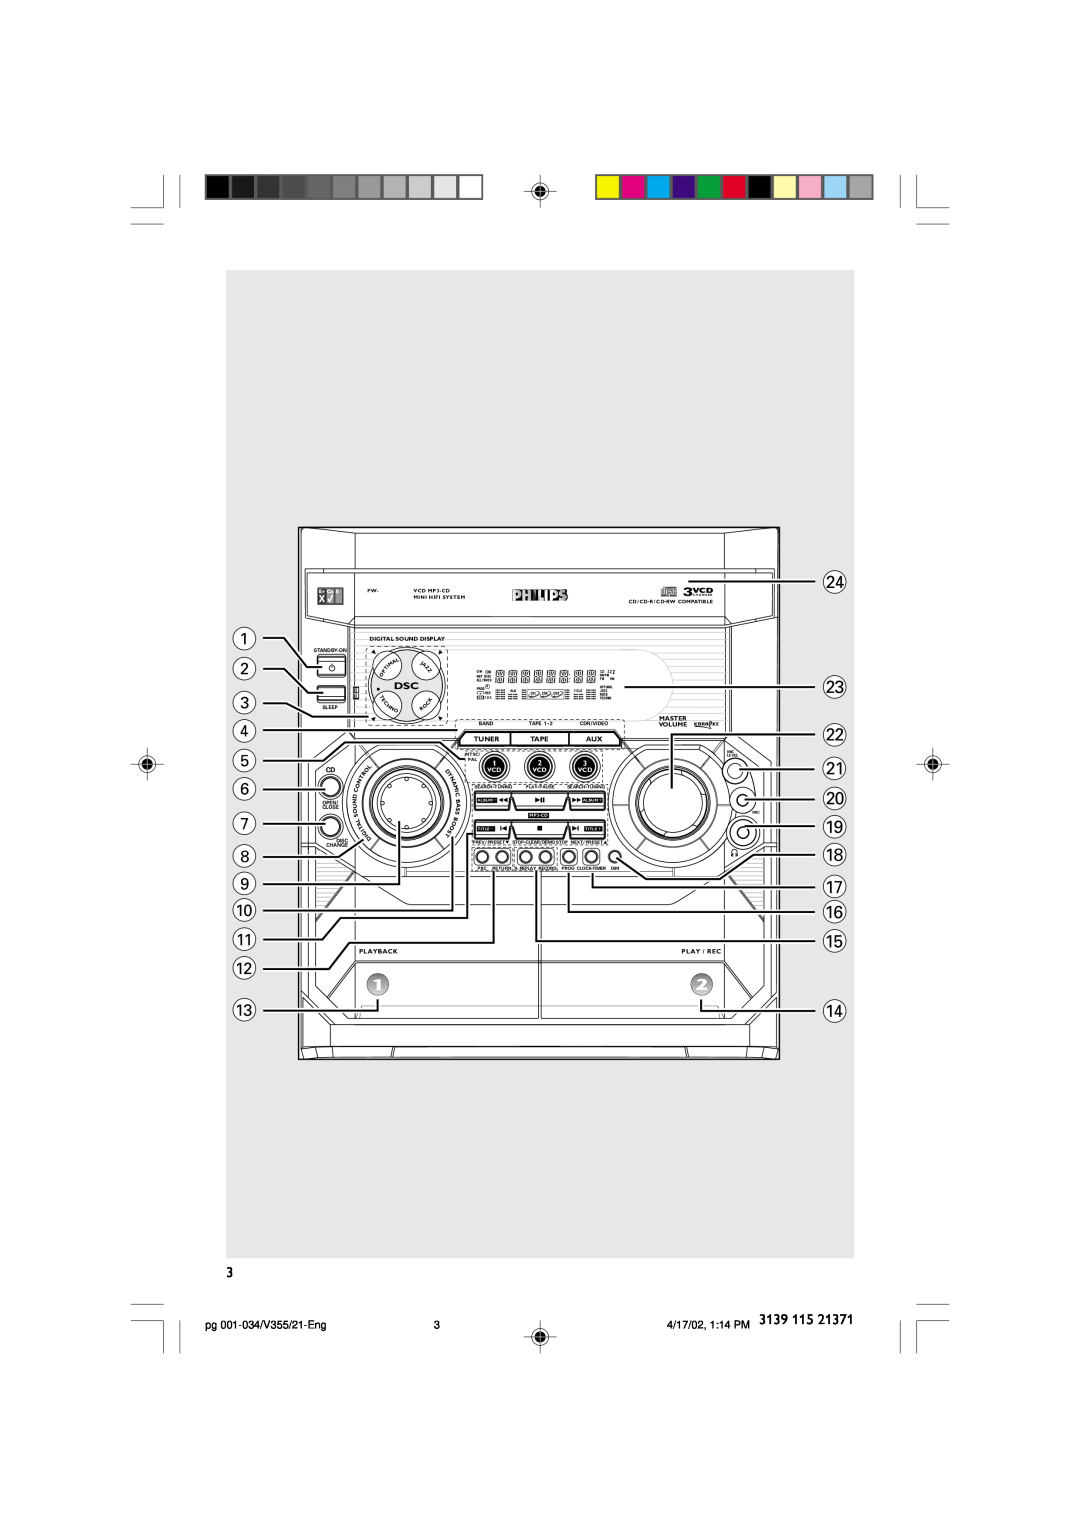 Philips FW-V355 manual $, pg 001-034/V355/21-Eng, 4/17/02, 1 14 PM 3139, Master, Volume, Tuner, Tape, Playback, Play / Rec 